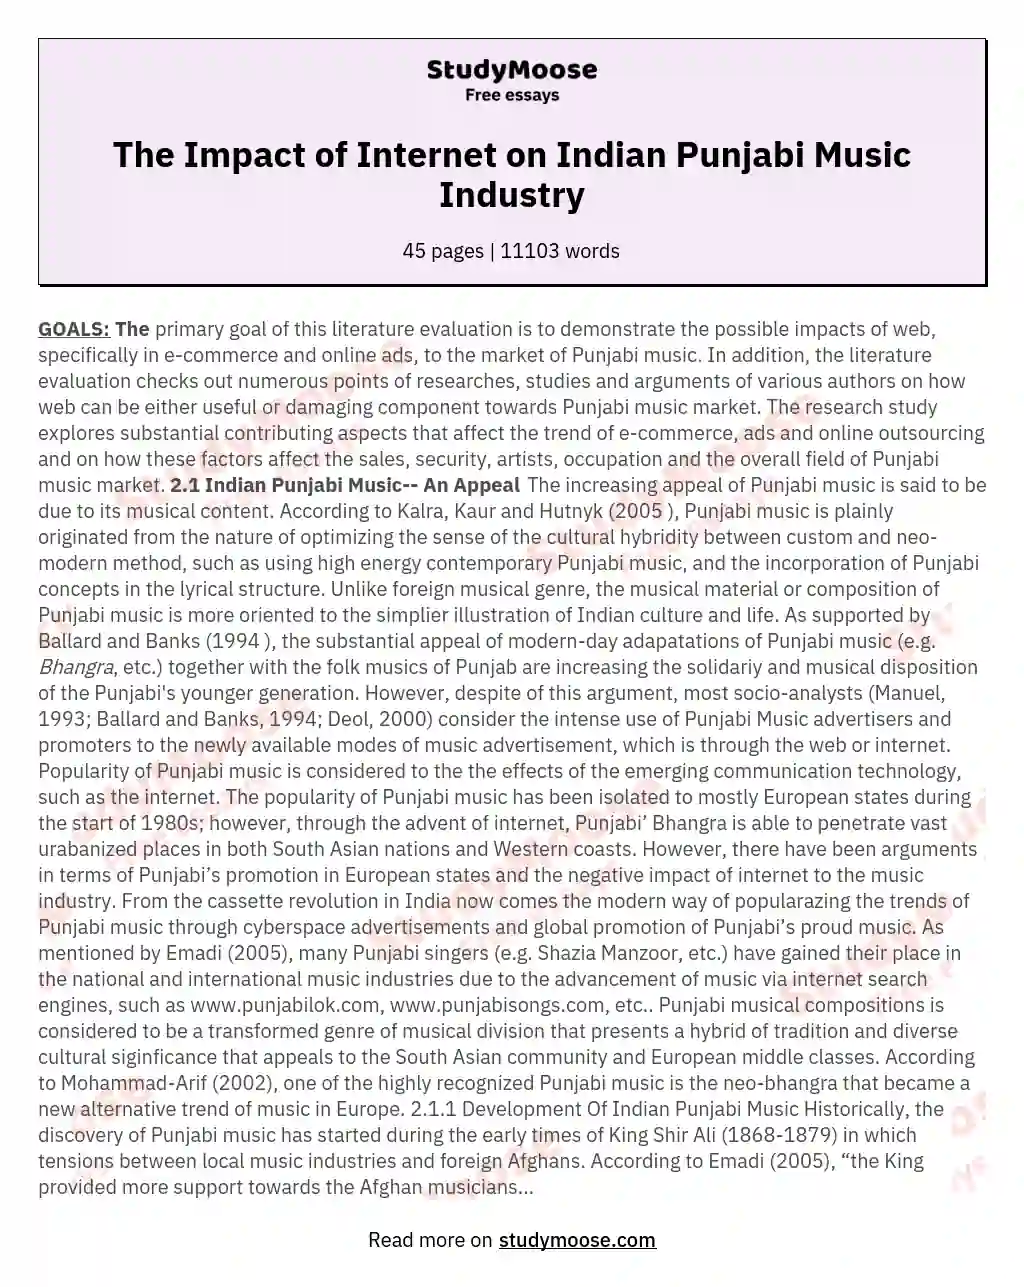 The Impact of Internet on Indian Punjabi Music Industry